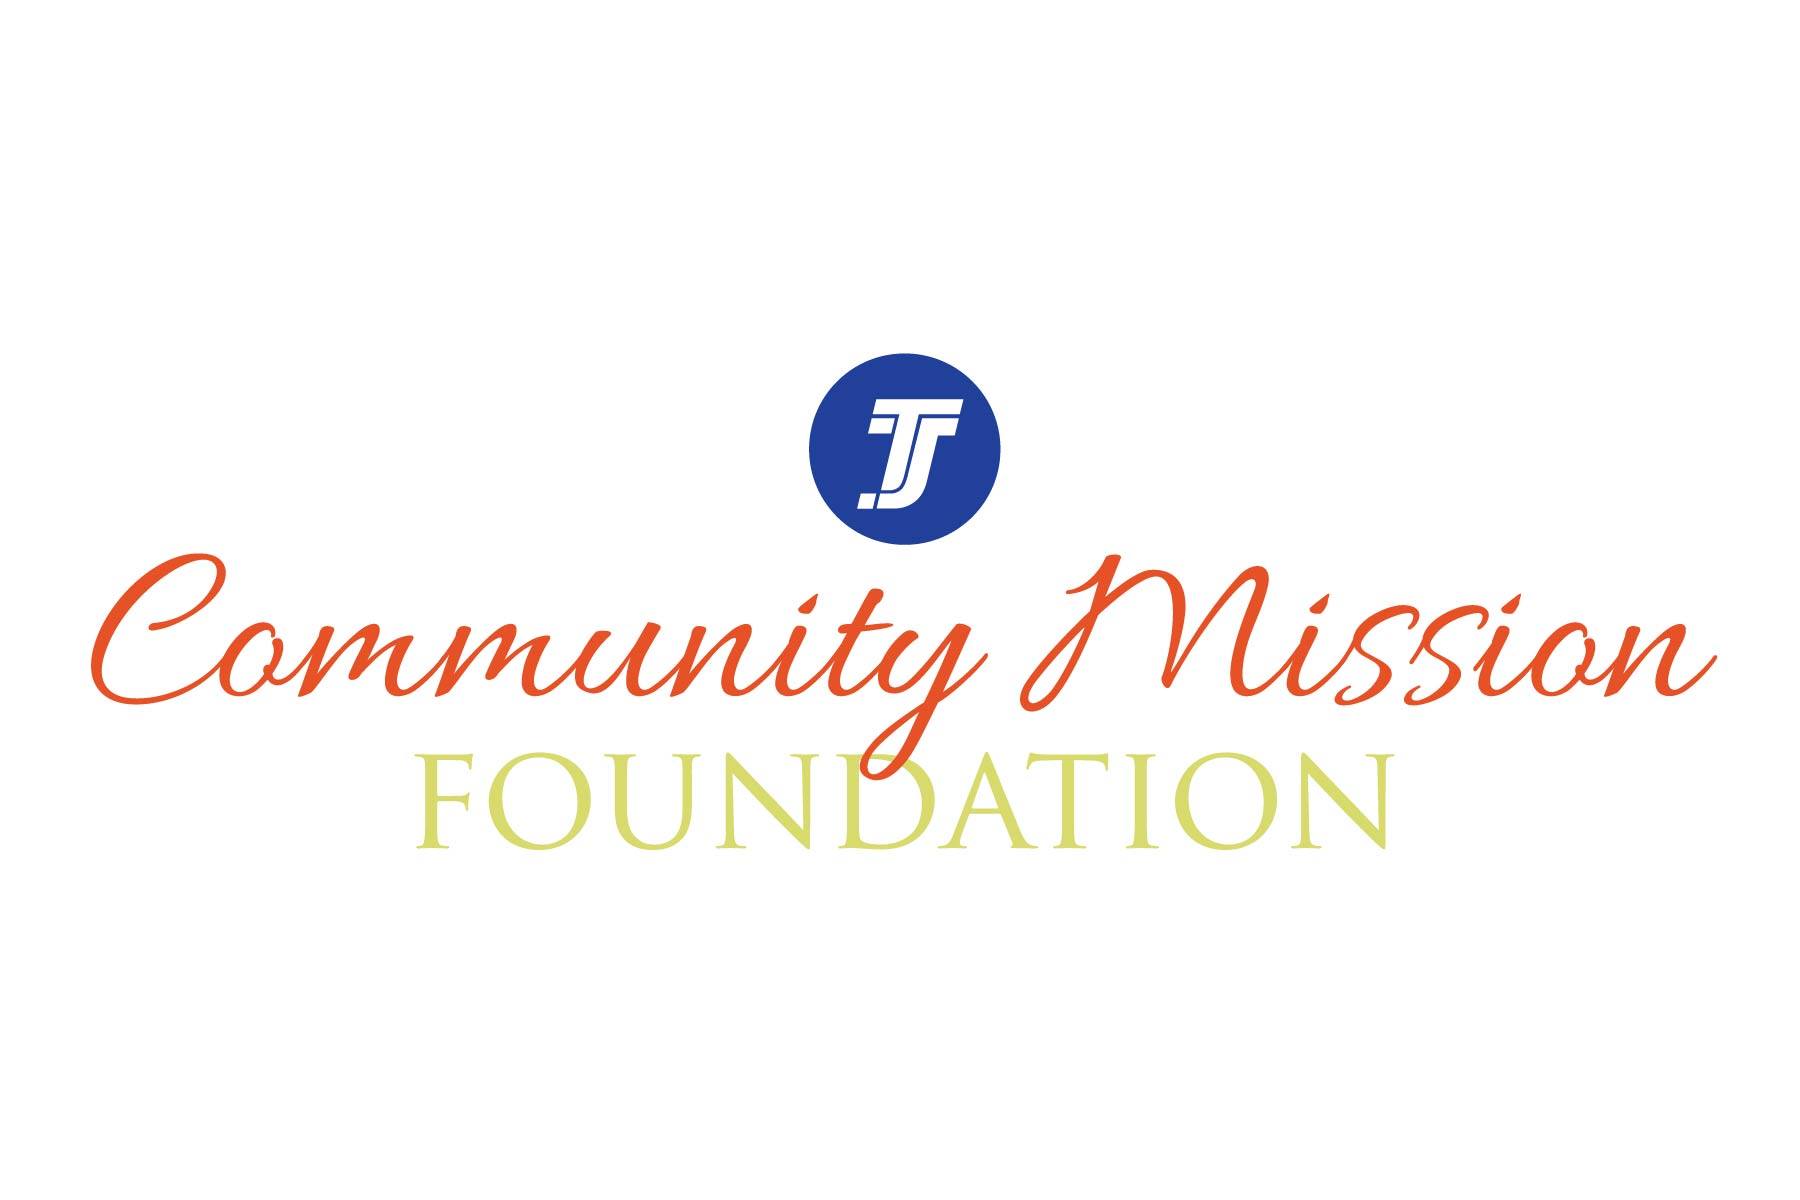 TJ Community Mission Coundation